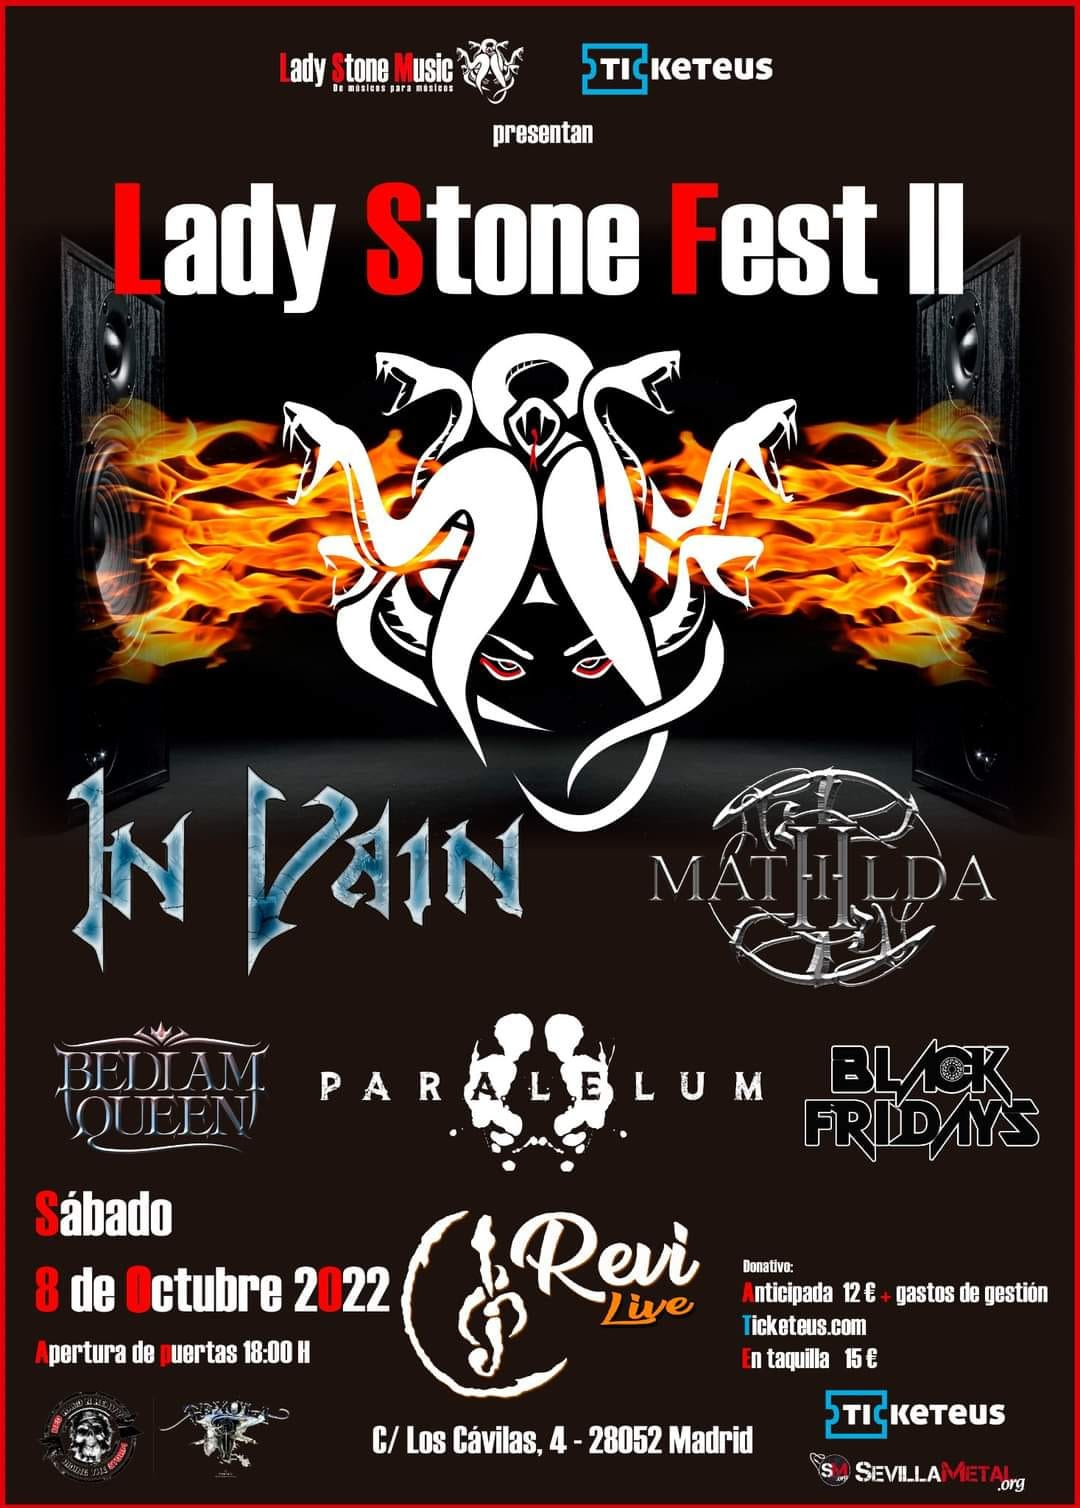 Llega el Lady Stone Fest II: El 8 de octubre en Madrid